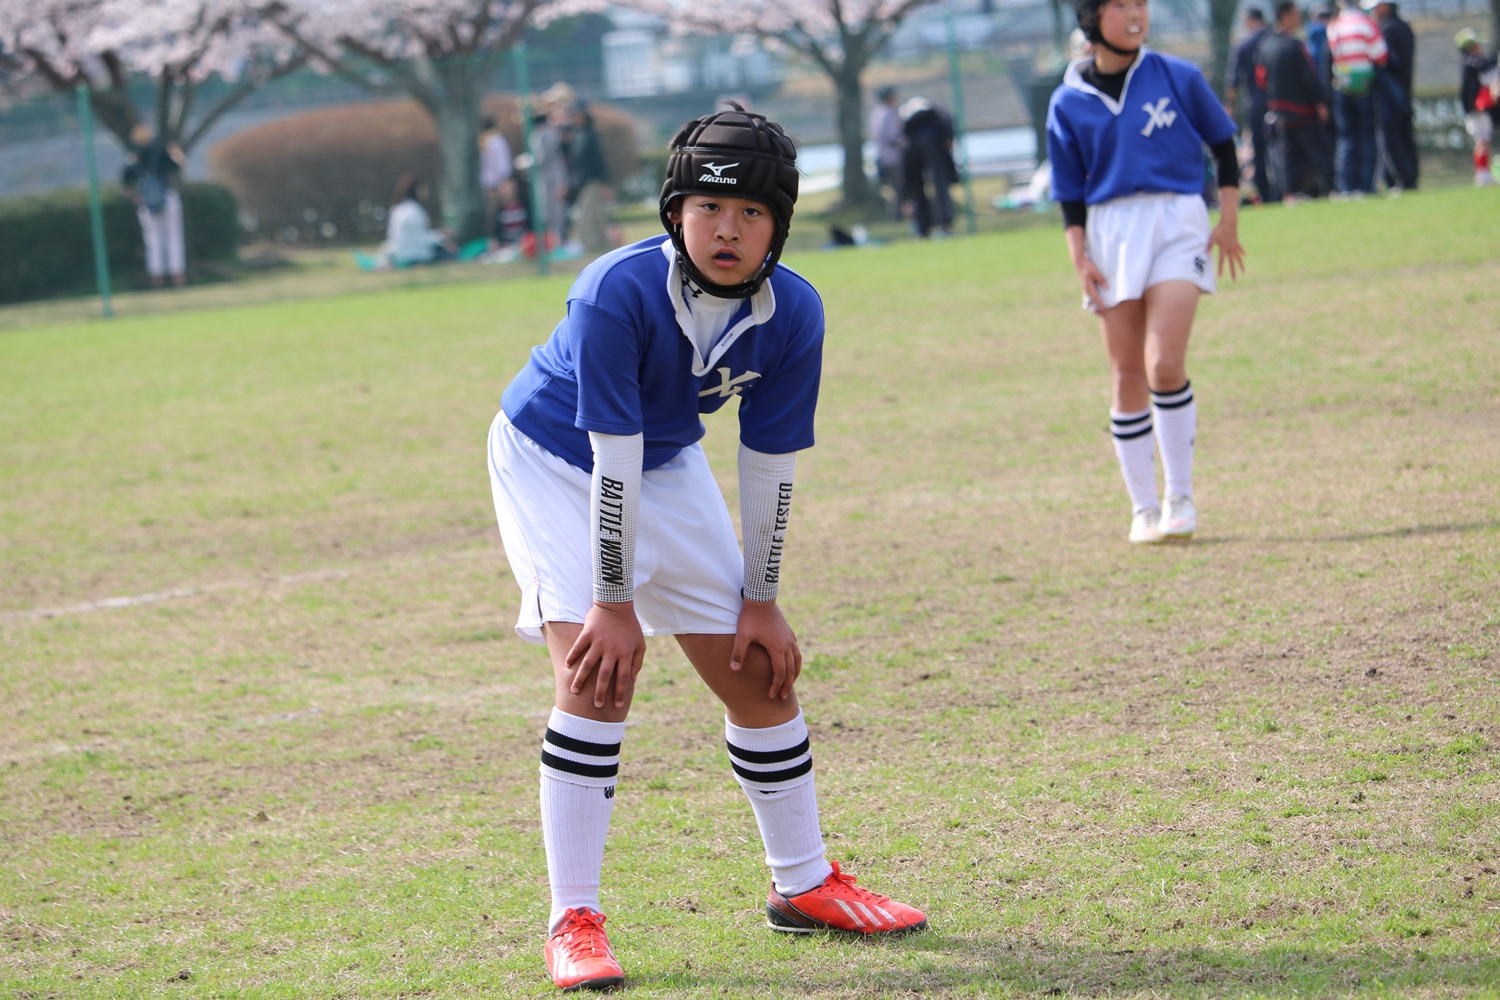 youngwave_kitakyusyu_rugby_school_kasugahai2016112.JPG